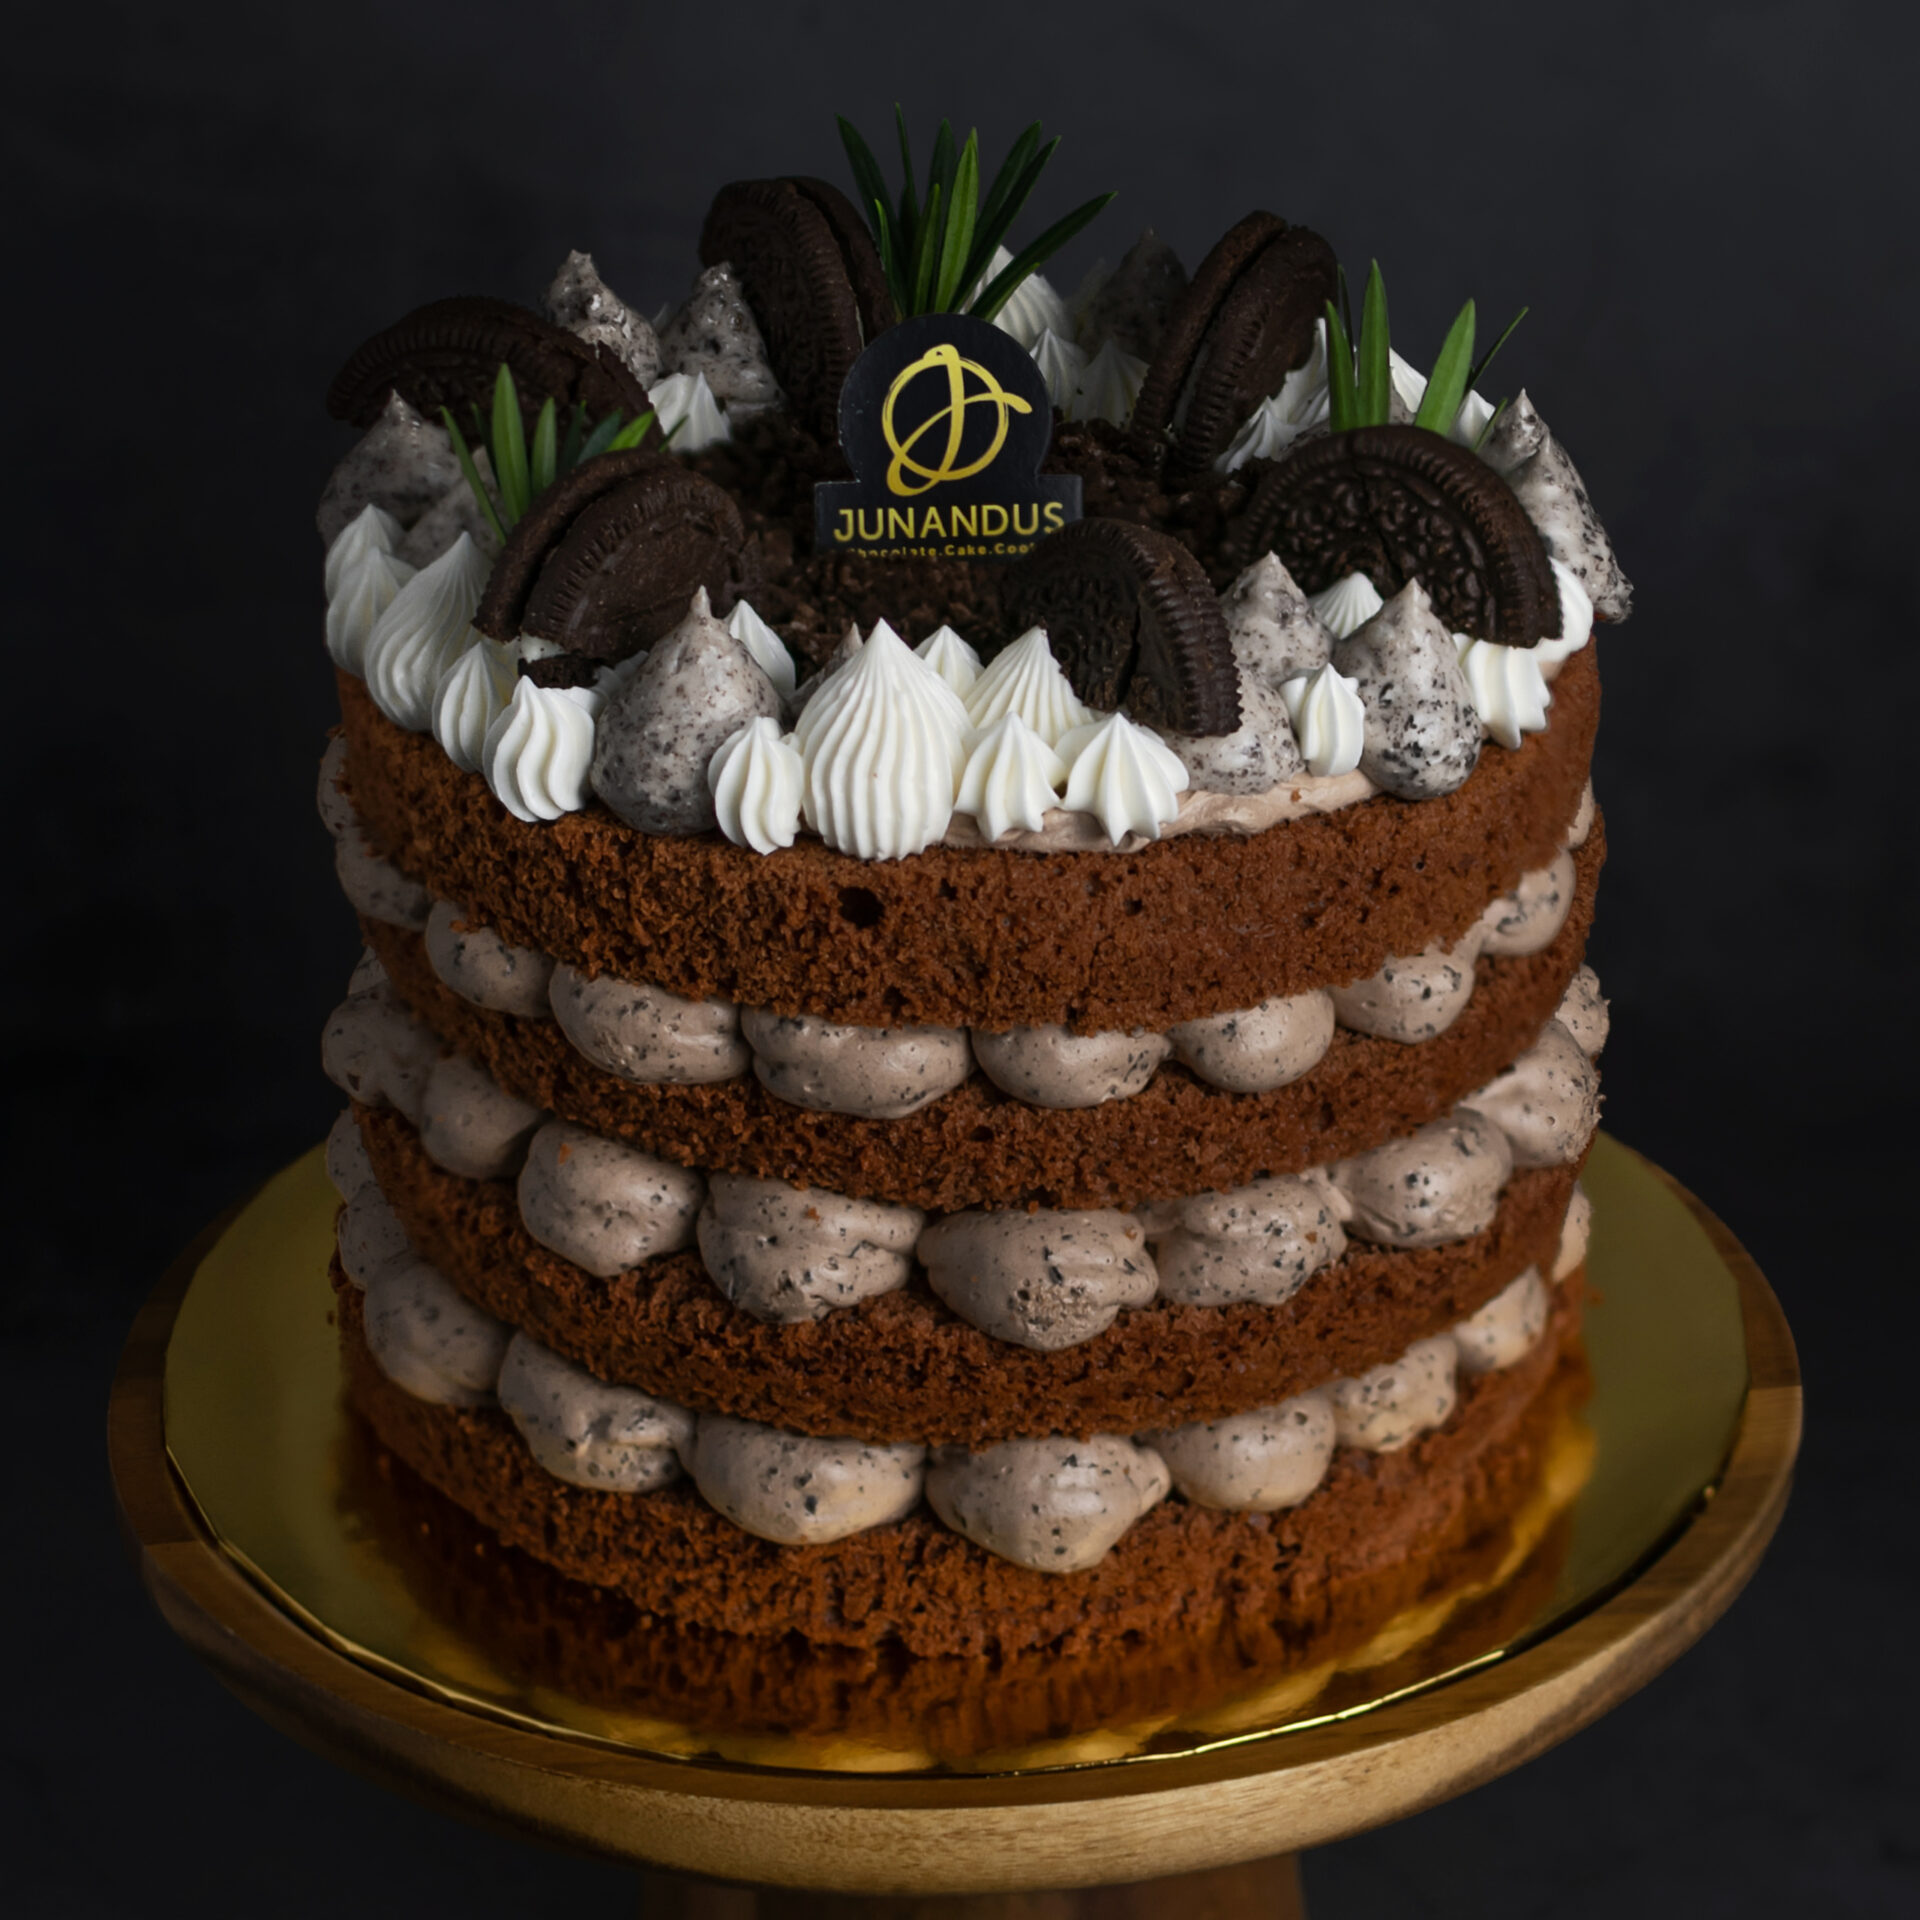 Oreo chocolate vegetarian naked cake – 6 inch (serve 10-20pax)